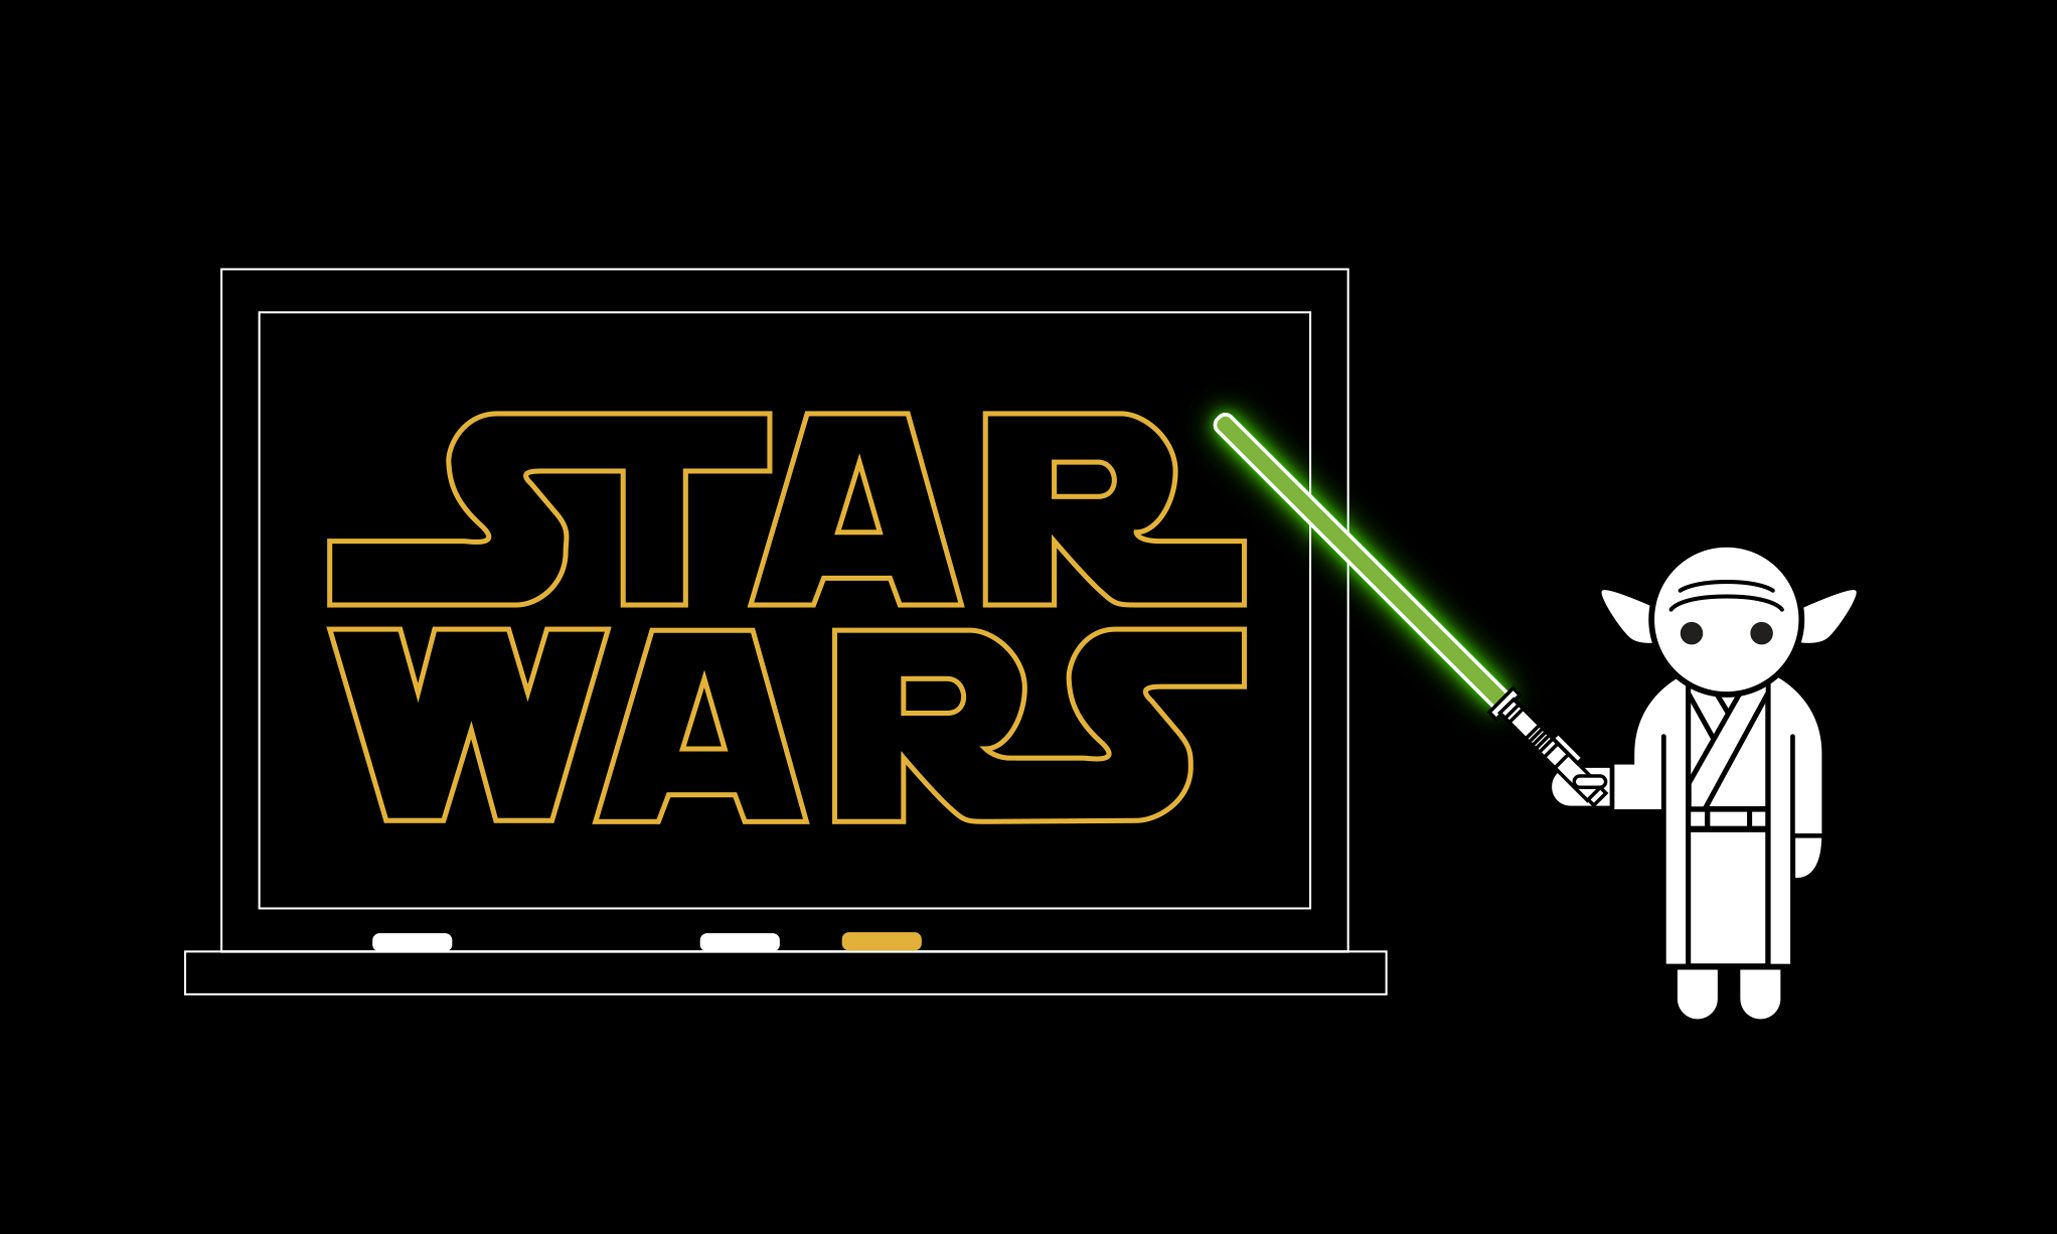 original star wars logo